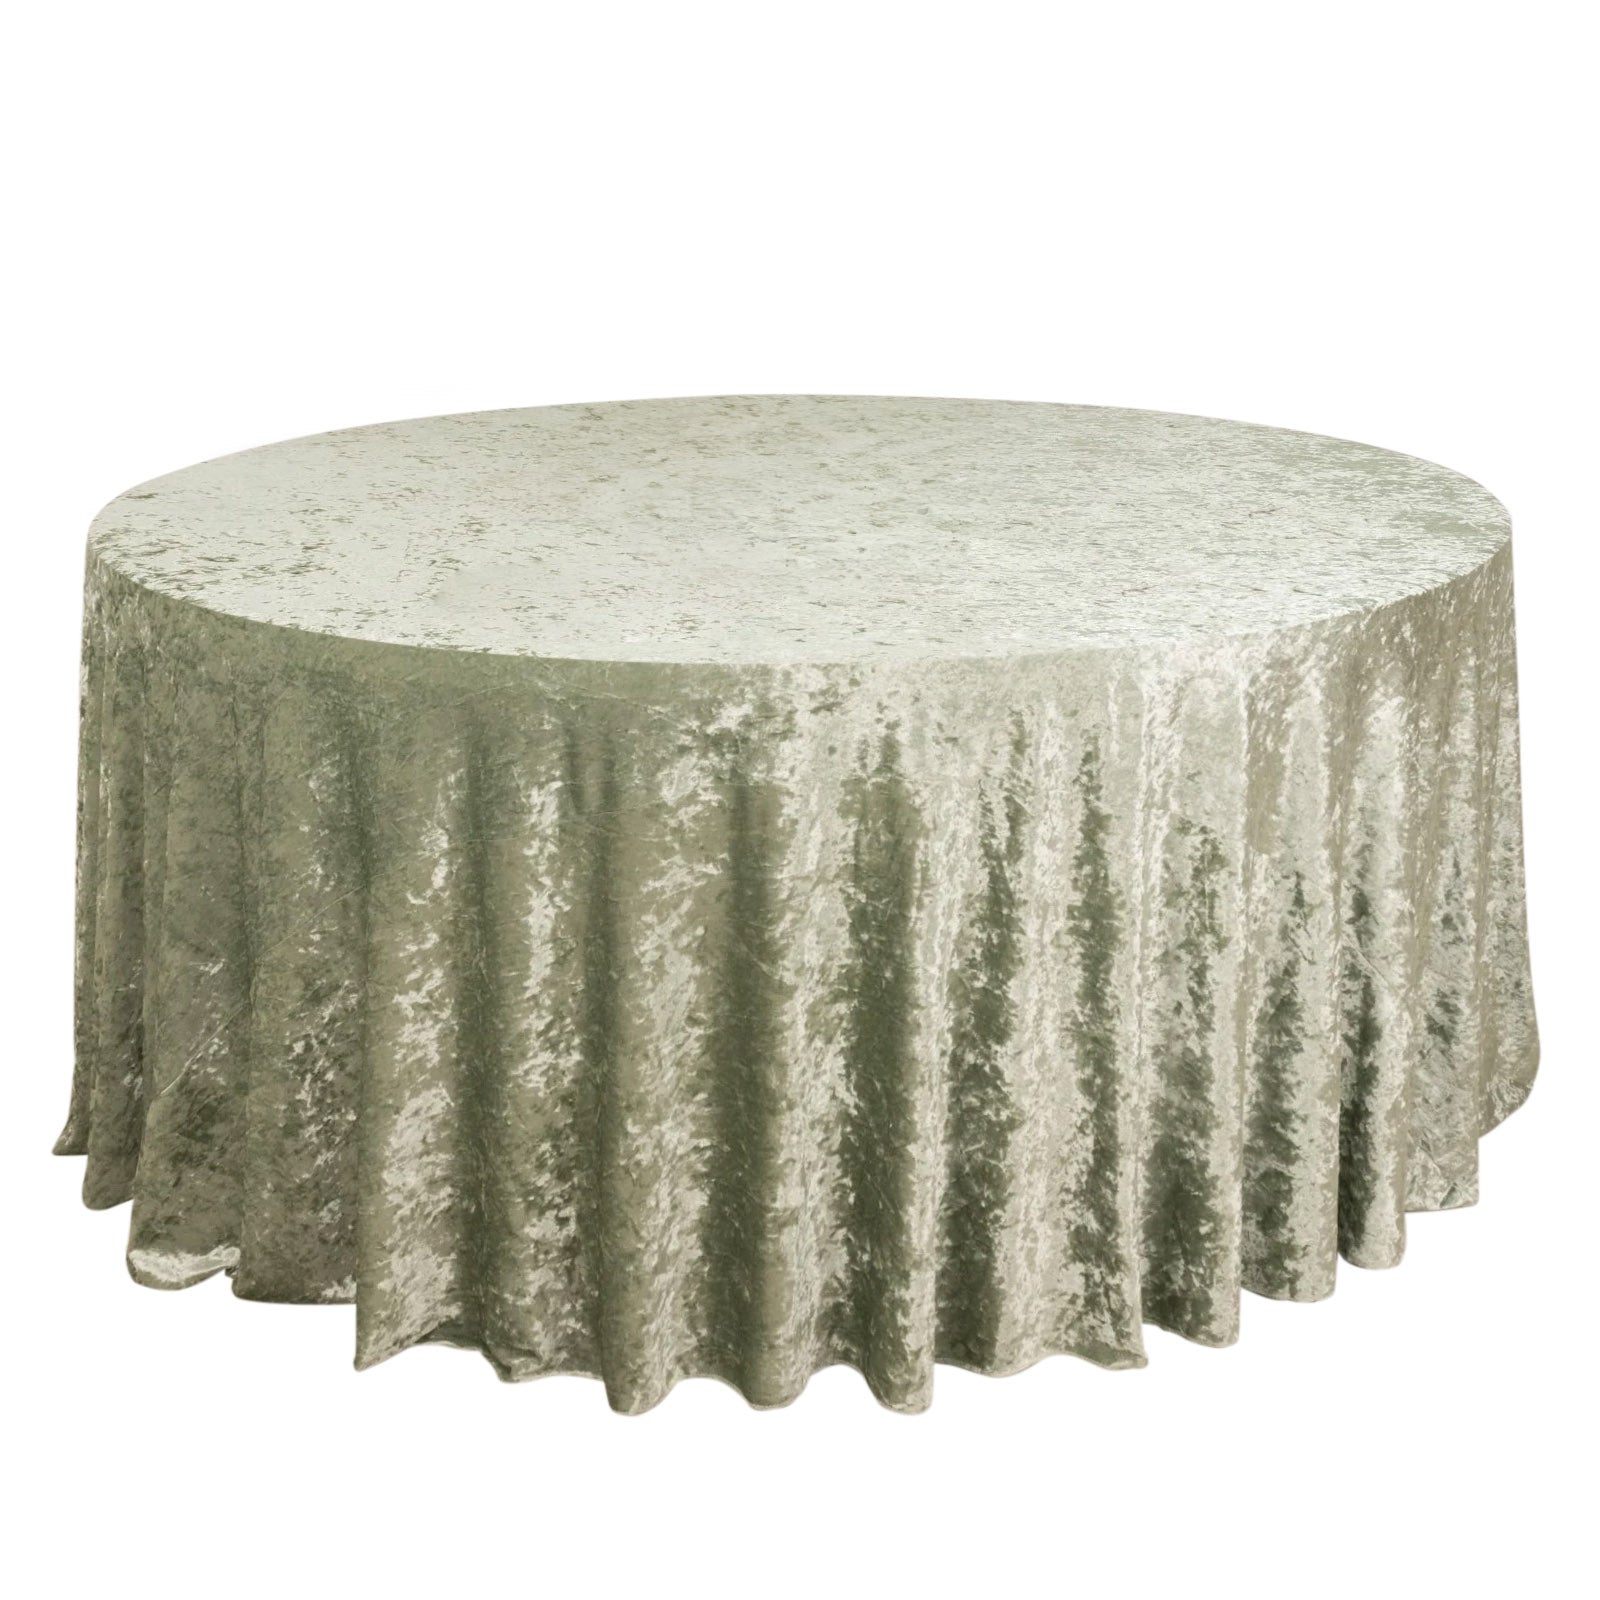 Velvet 120 Round Tablecloth - Emerald Green - CV Linens